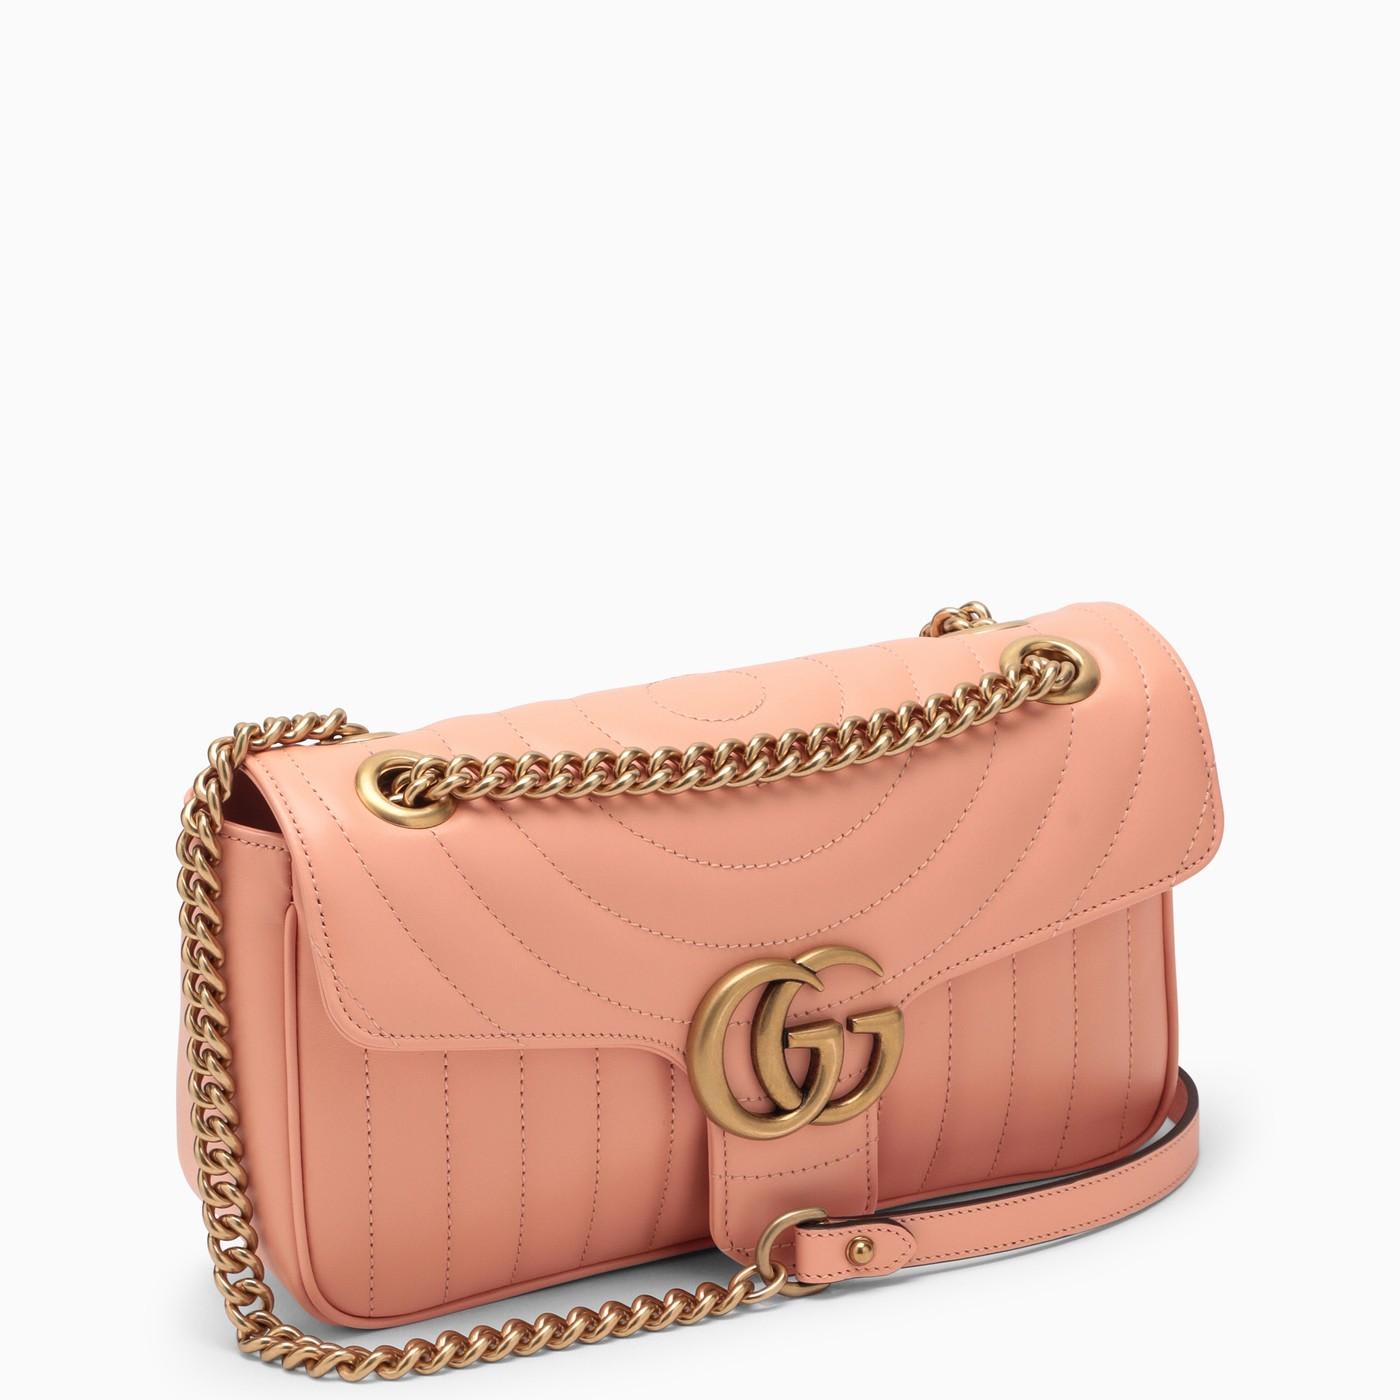 Gucci GG Marmont matelassé mini bag  Gg marmont matelassé mini bag, Latest  designer handbags, Bags